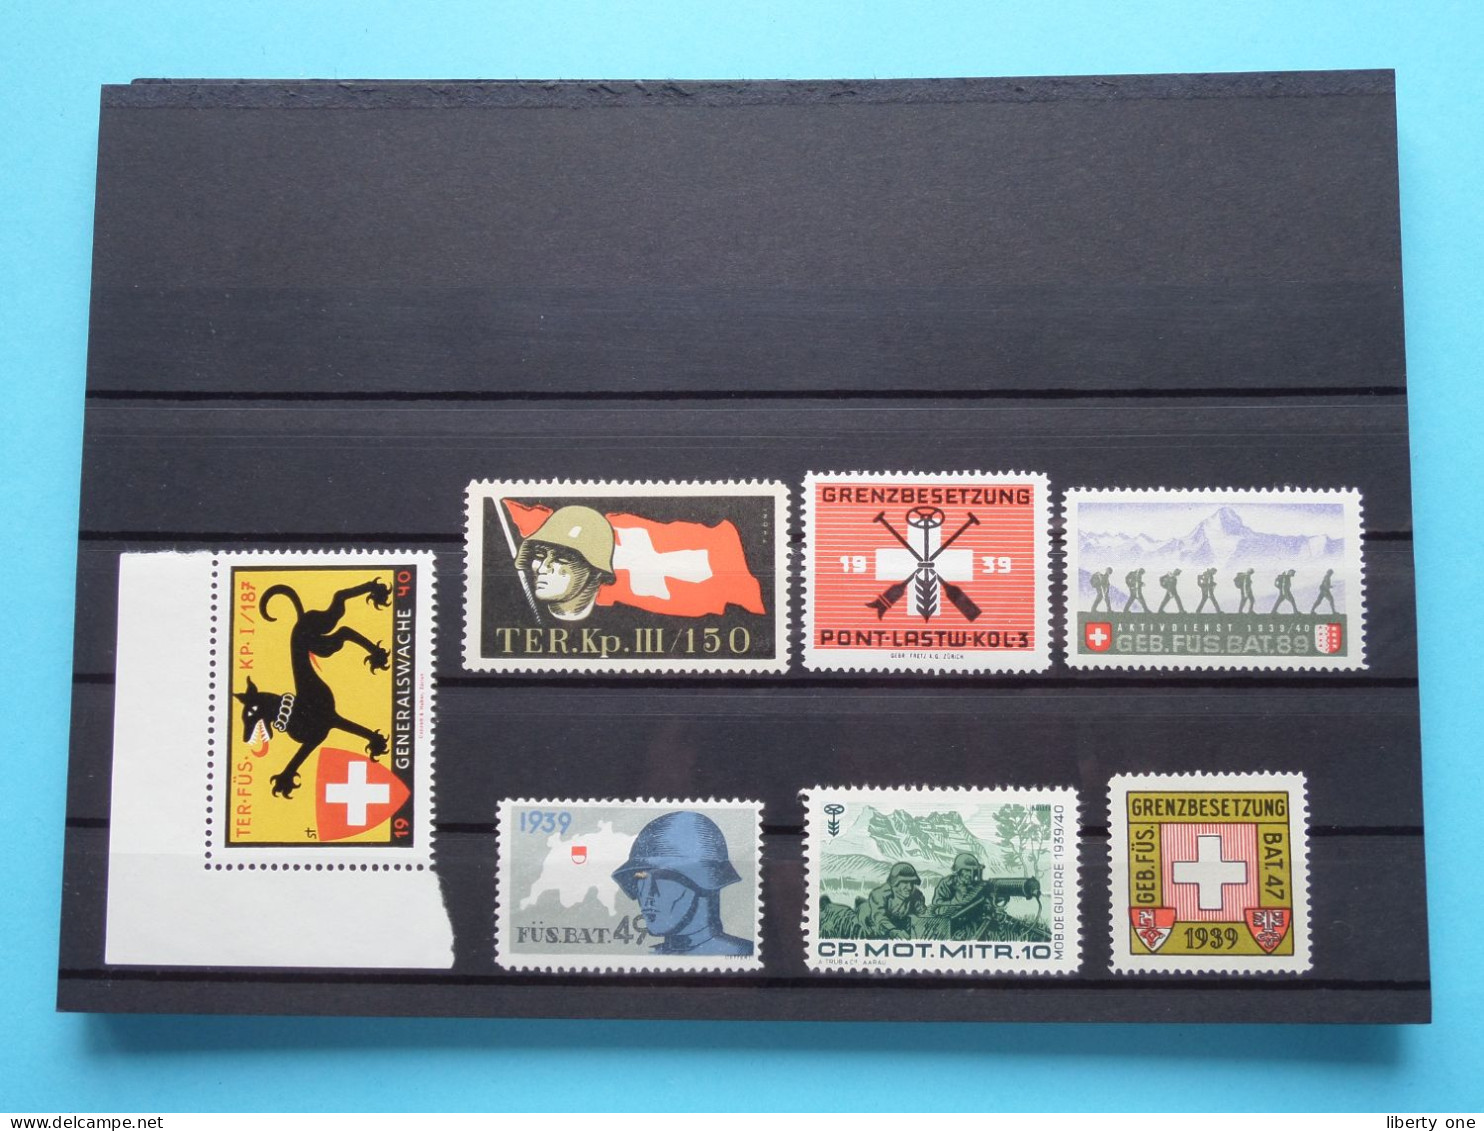 Lotje >> Sluitzegel Timbres-Vignettes Picture Stamp Verschlussmarken ( What You See Is What You Get ) La SUISSE ! - Gebührenstempel, Impoststempel